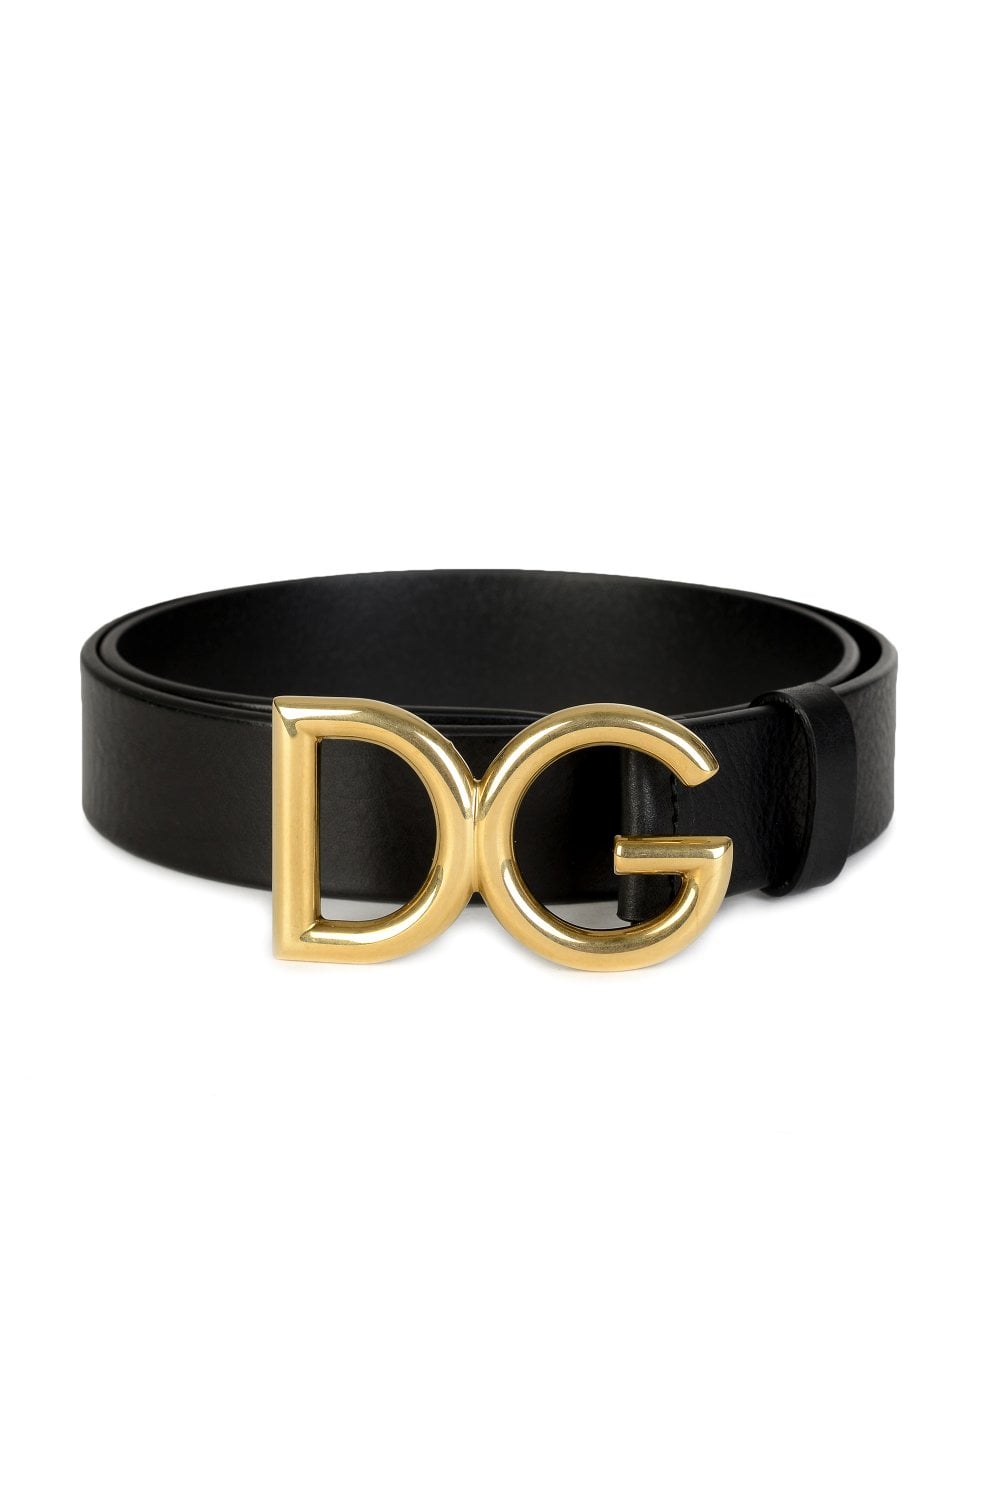 Buckle Clothing Logo - DOLCE & GABBANA DG Logo Buckle Belt Black from Circle